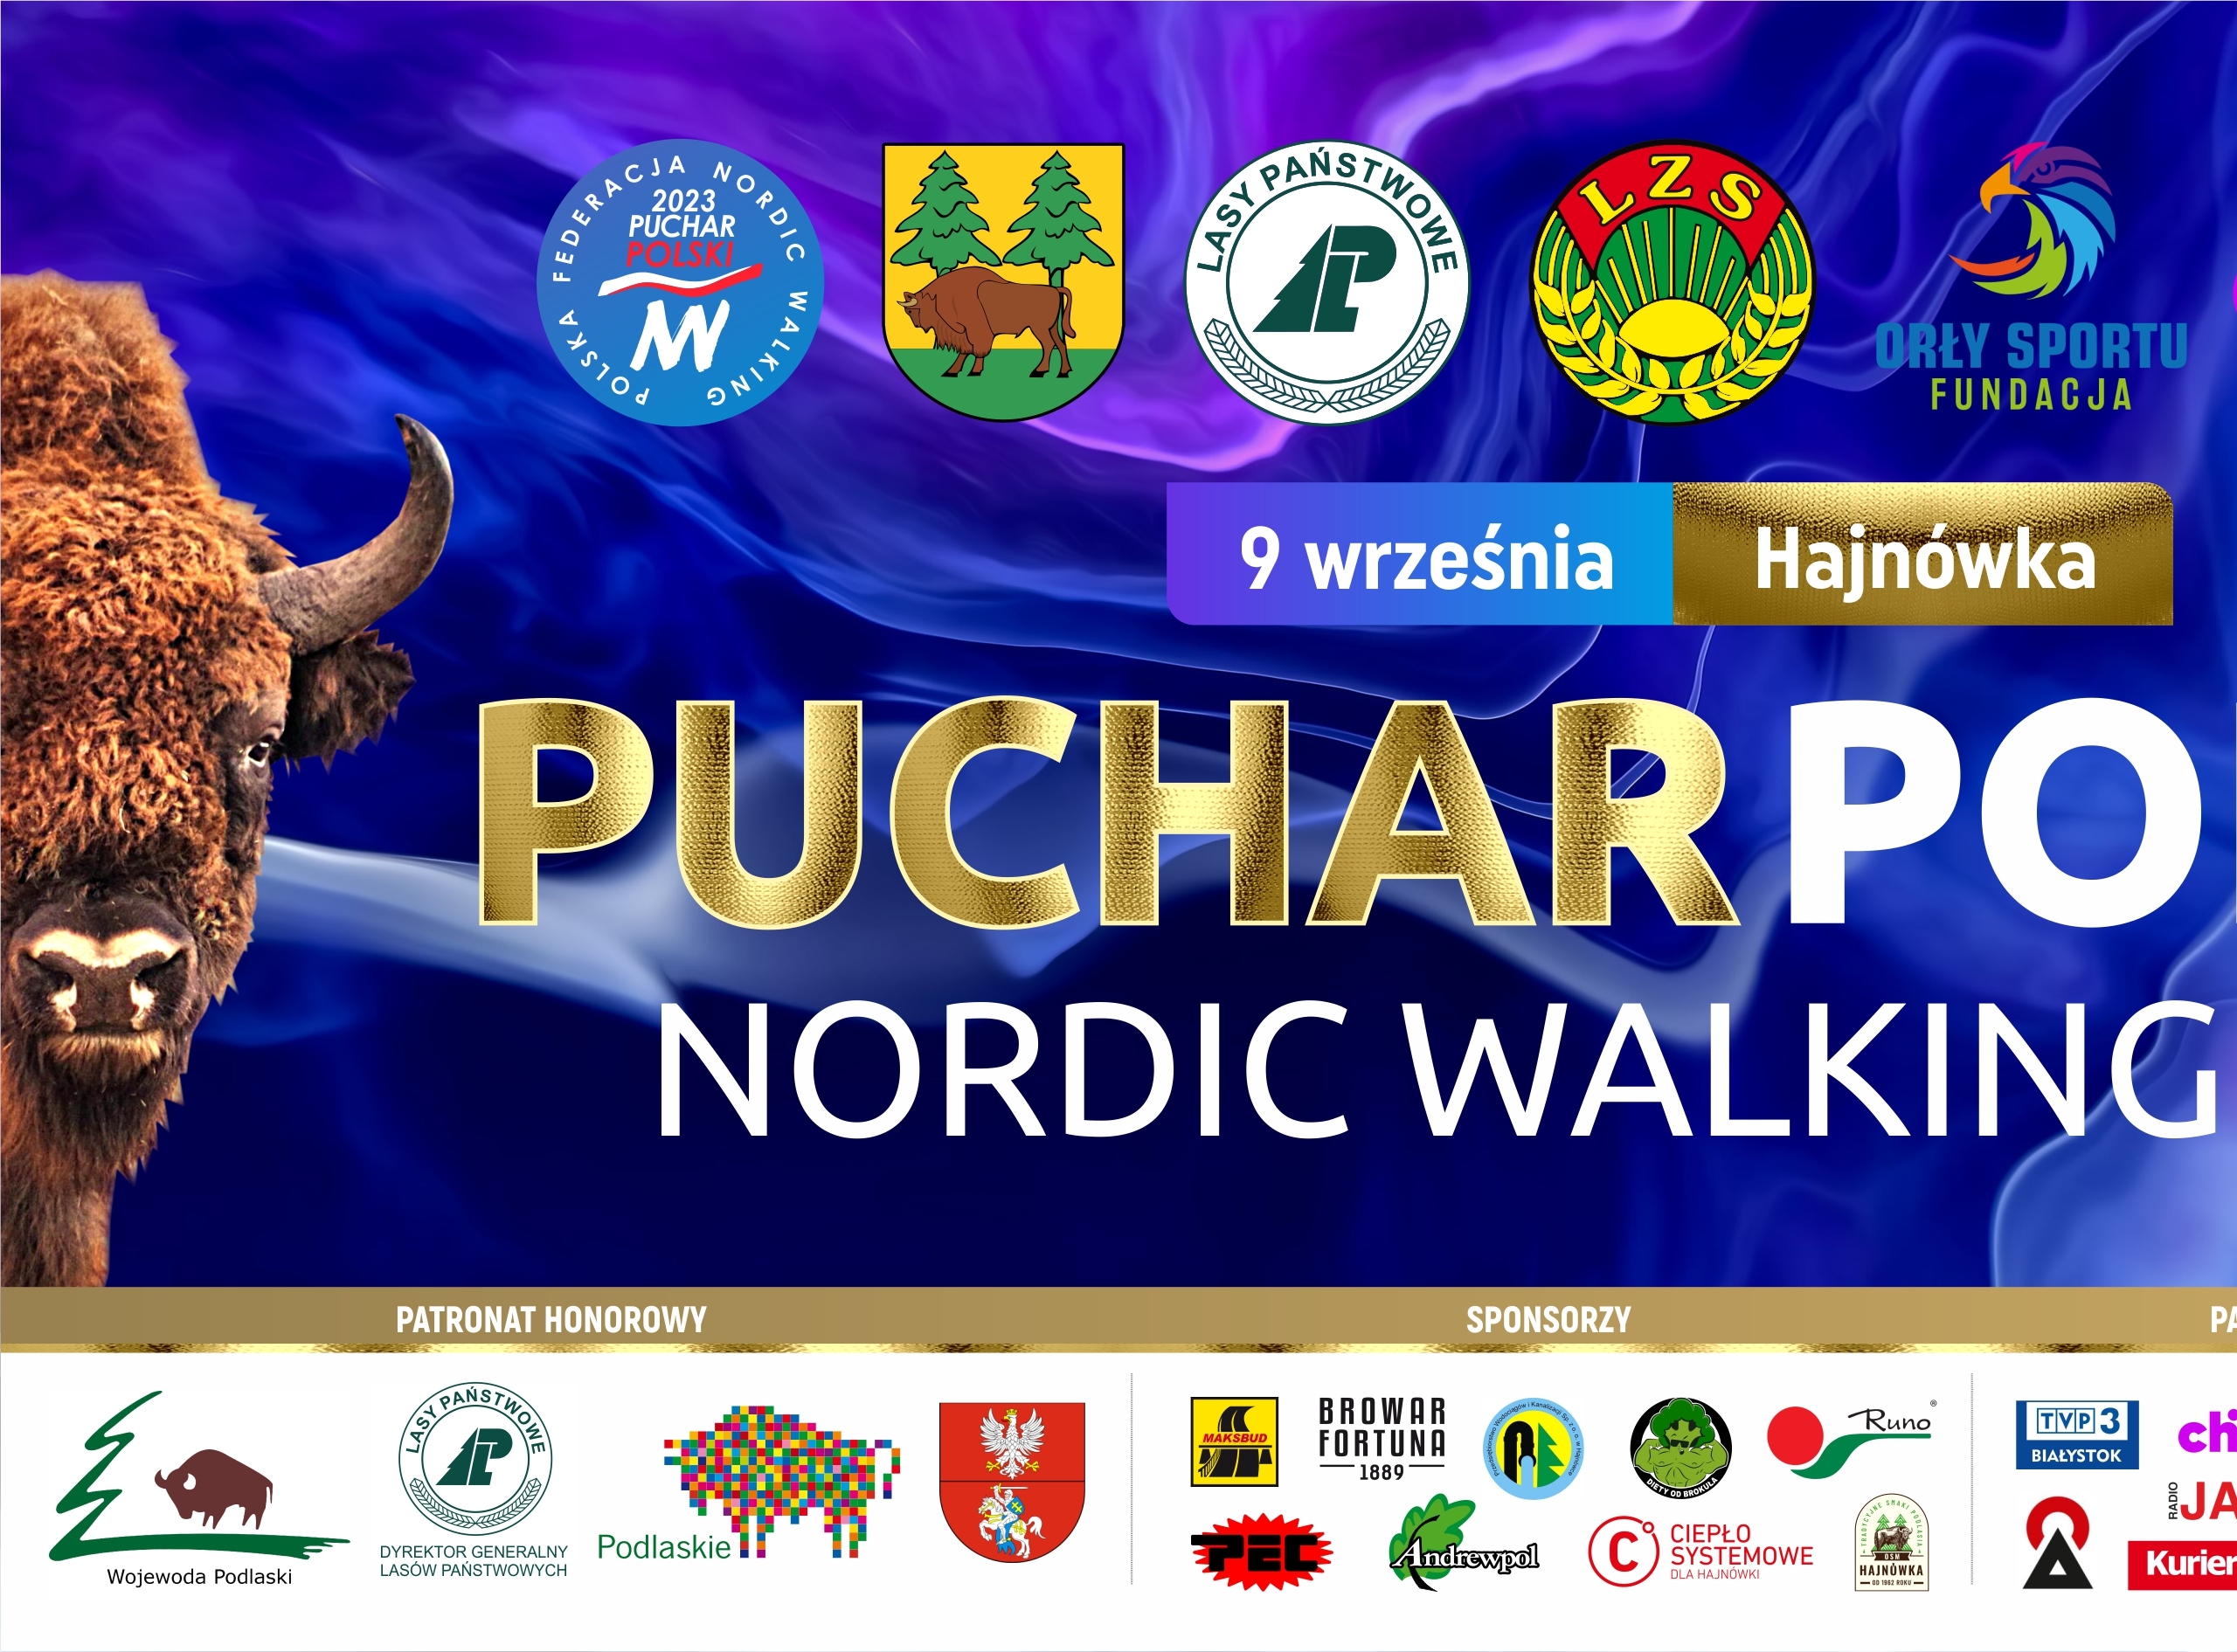 Puchar Polski Nordic Walking Hajnówka 2023